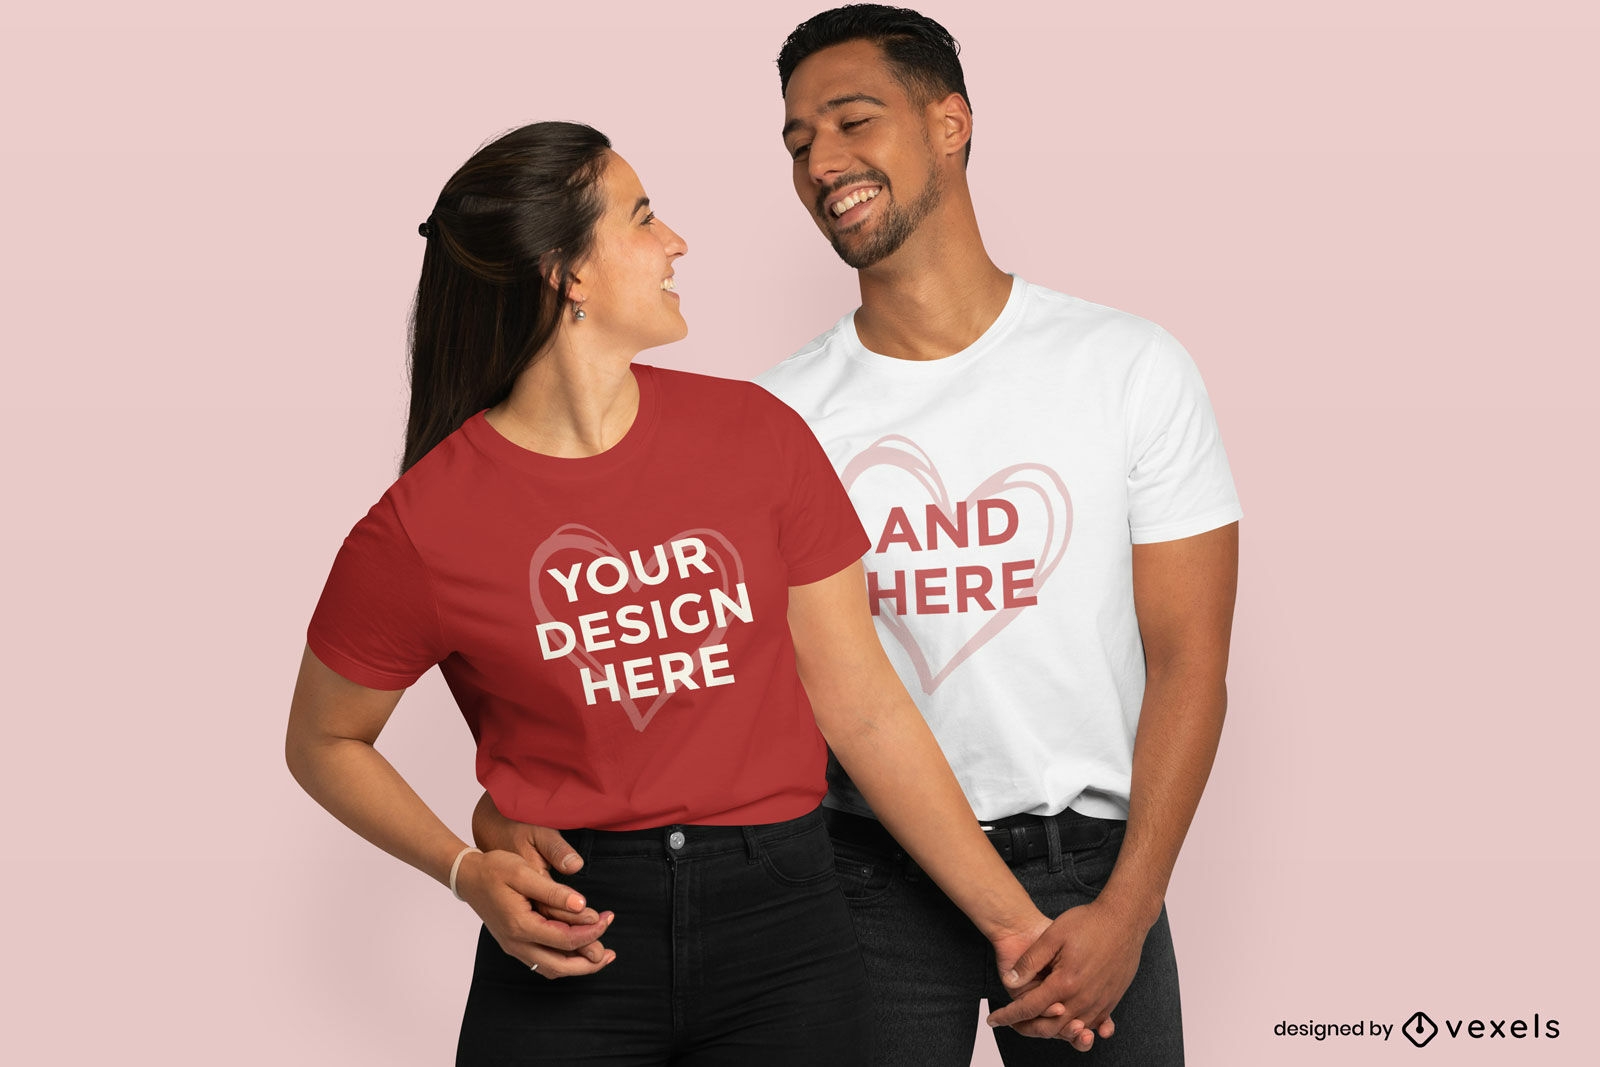 Lovely couple t-shirt mockup